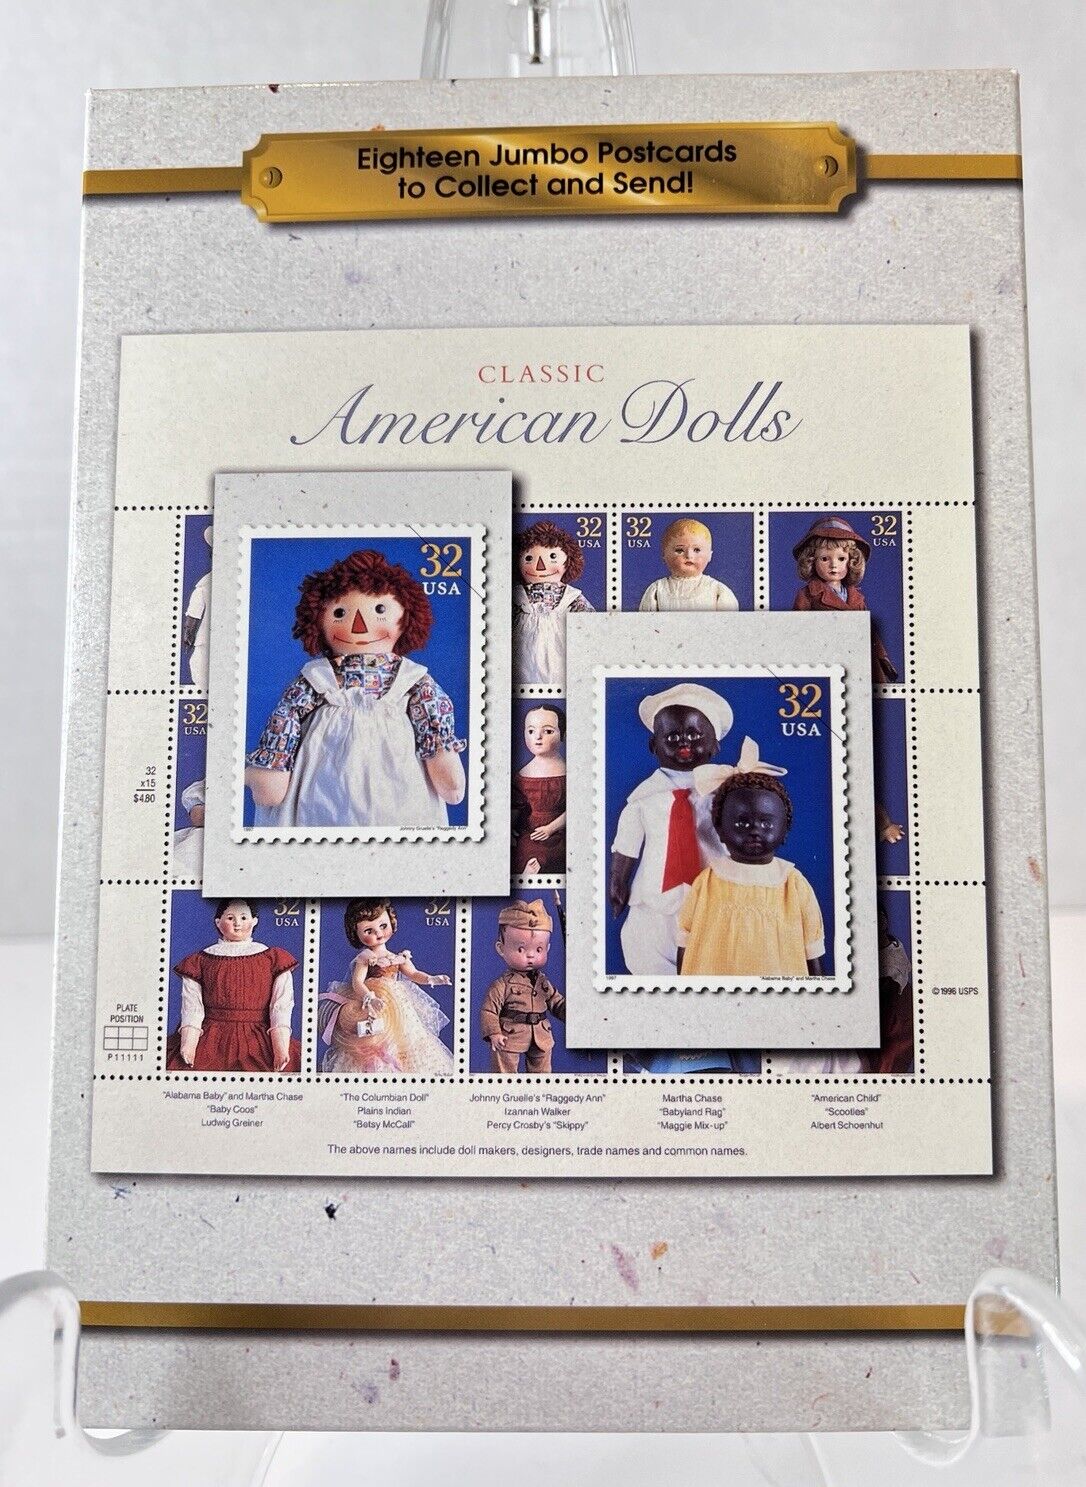 1997 United States Postal Service Classic American Dolls 18 Jumbo Postcards